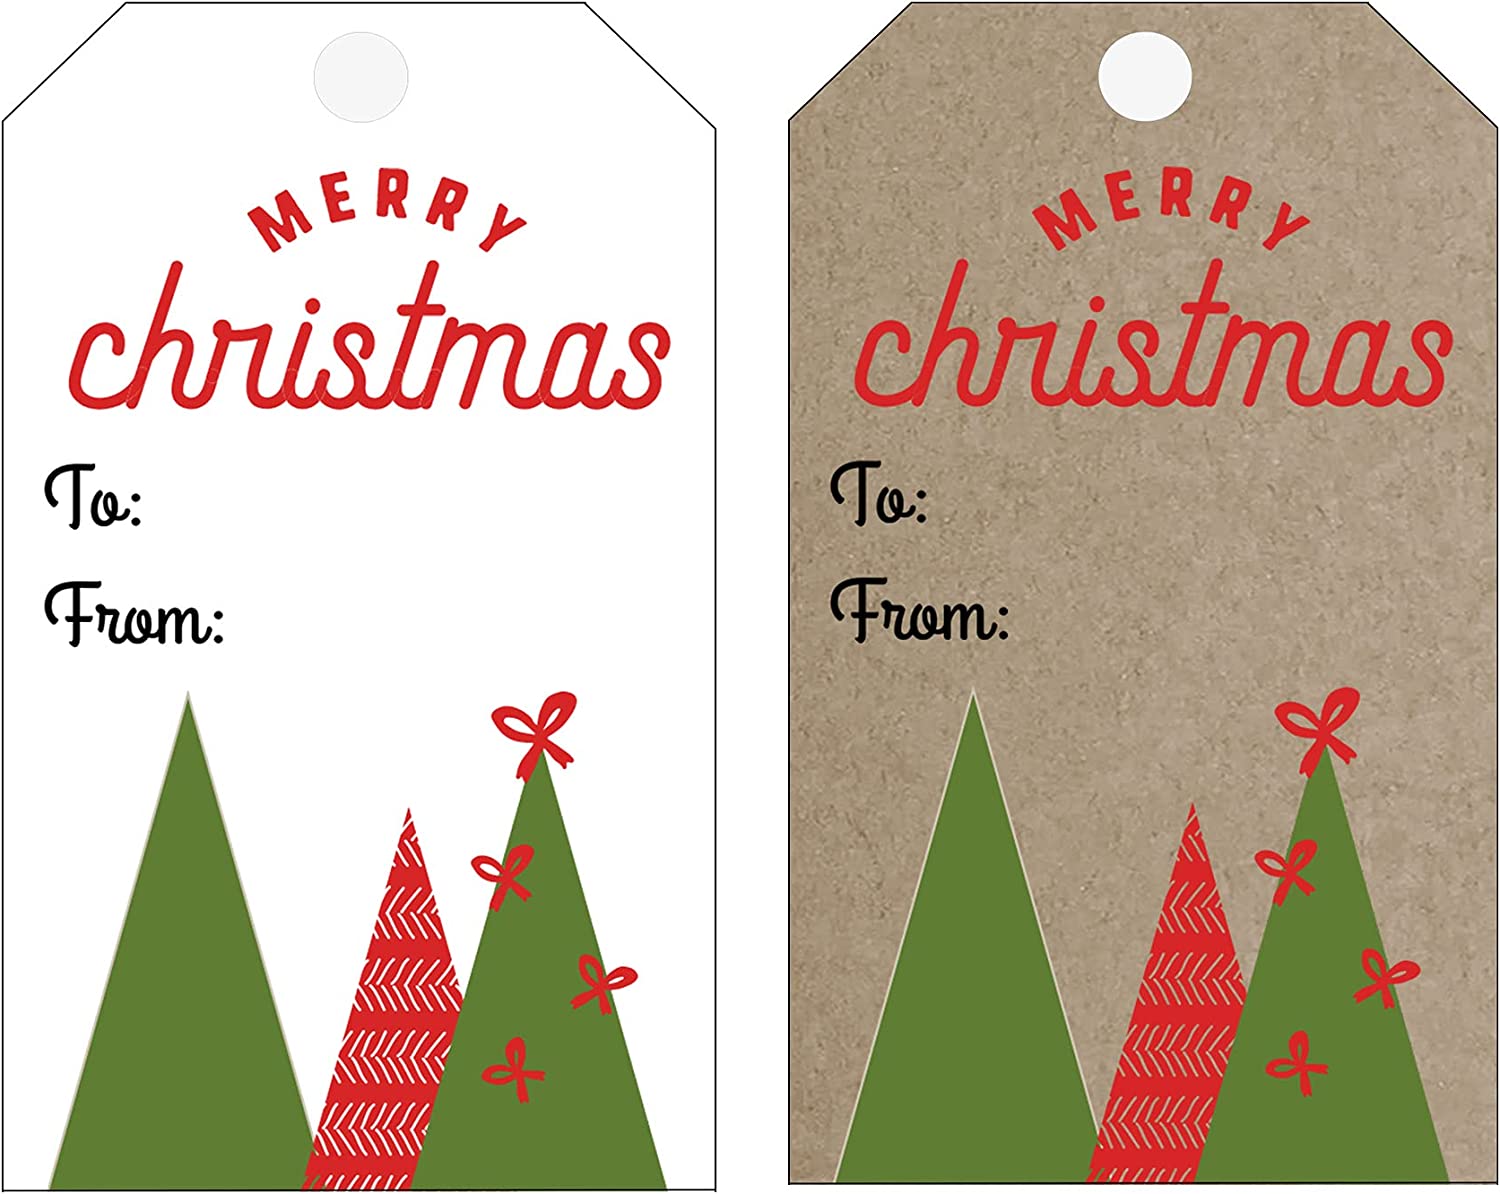 Printable Christmas Sticker Bundle for Print and Cut